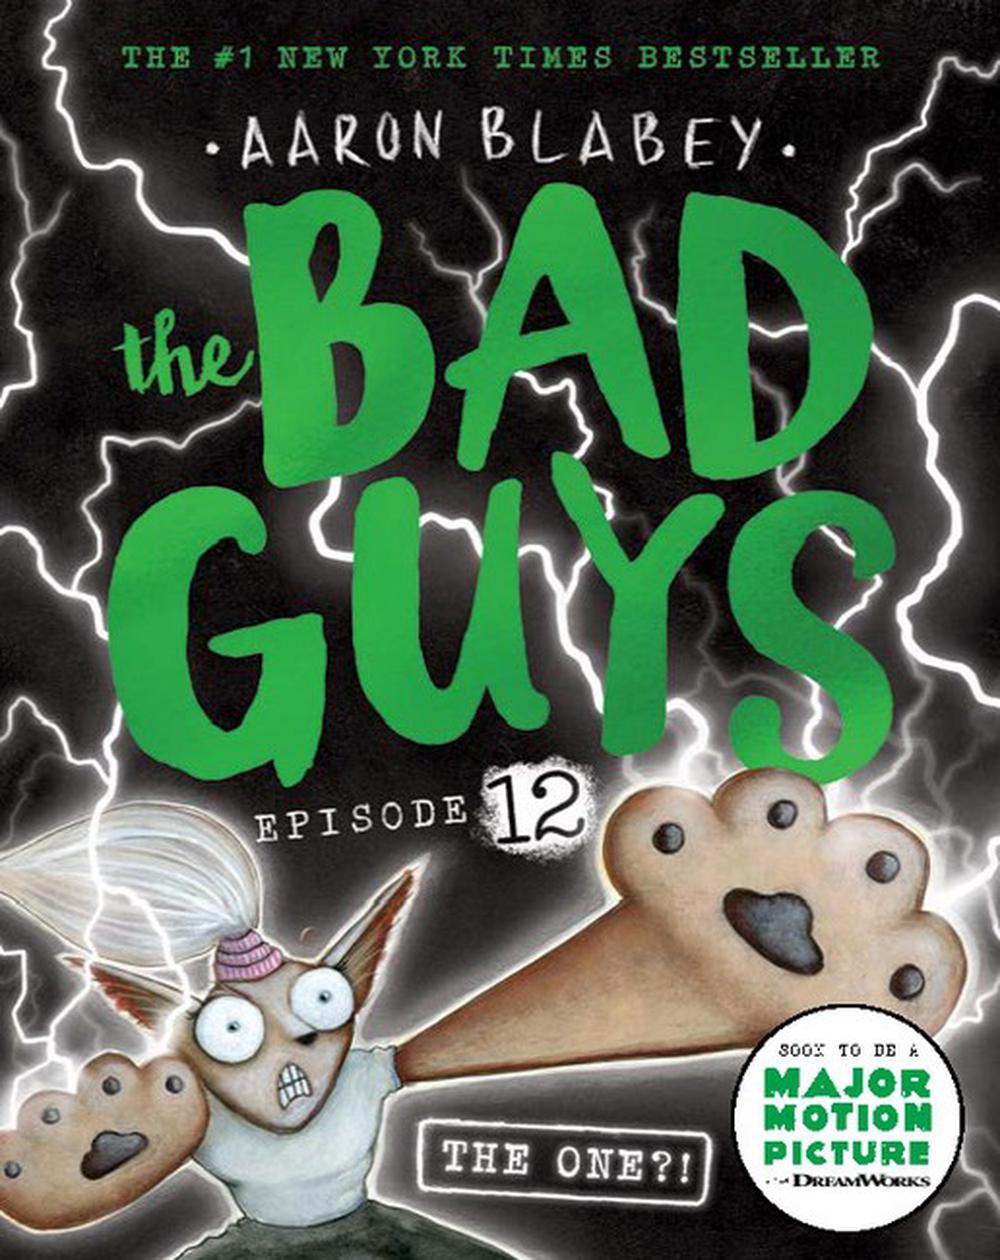 the bad guys books author